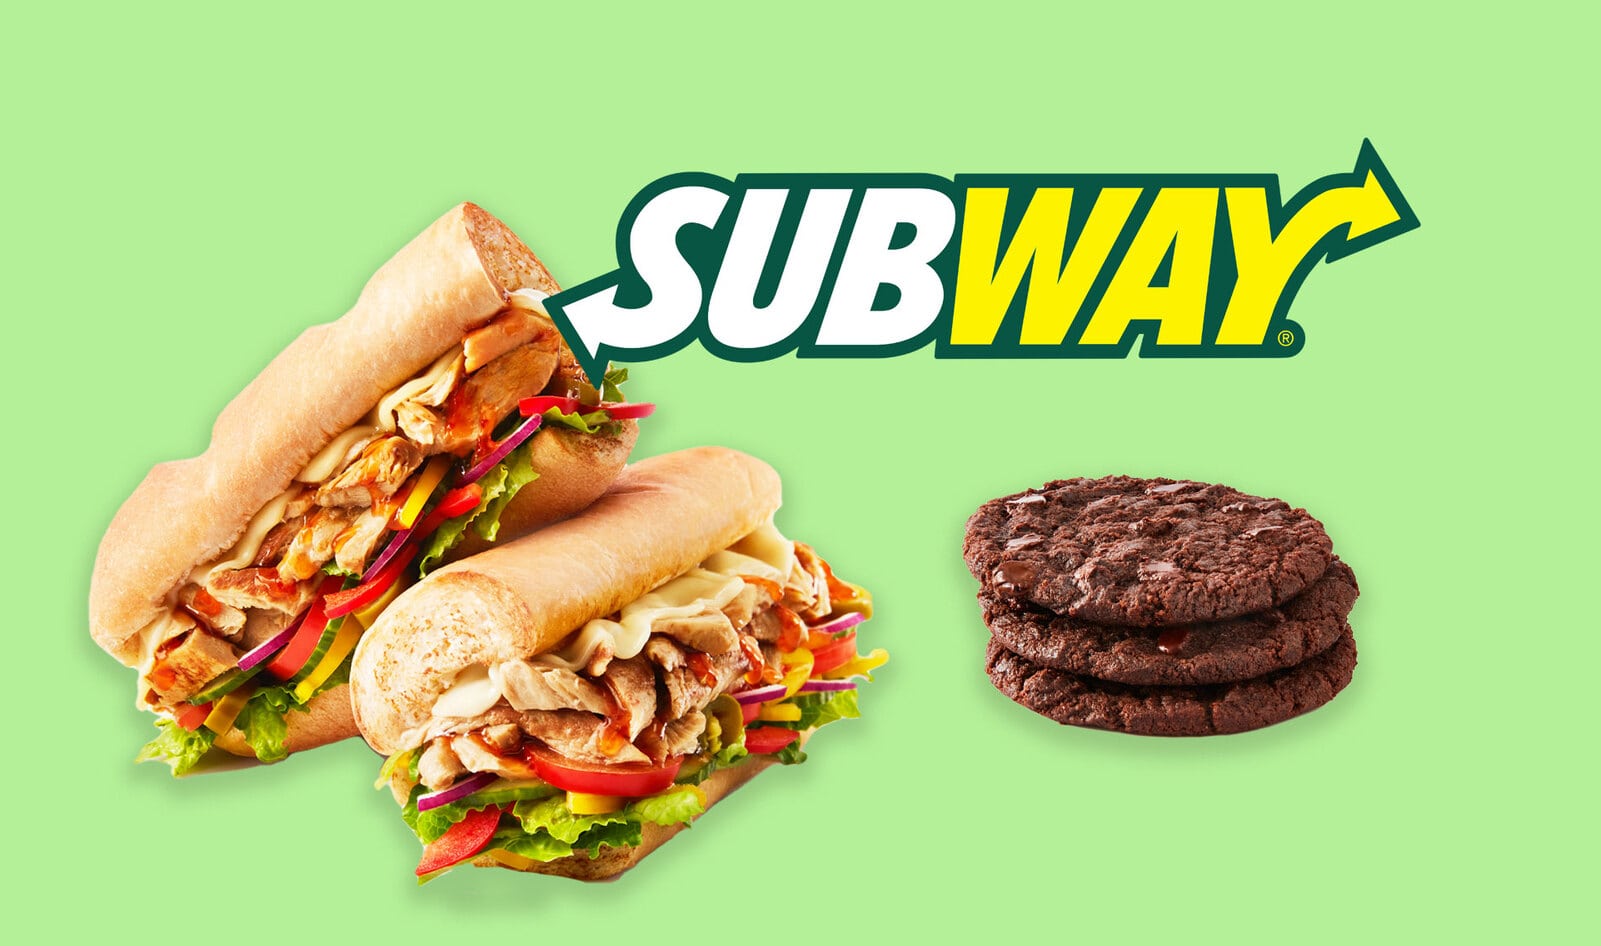 Subway Adds Vegan Chicken Sandwich, Chocolate Cookie to UK Menu